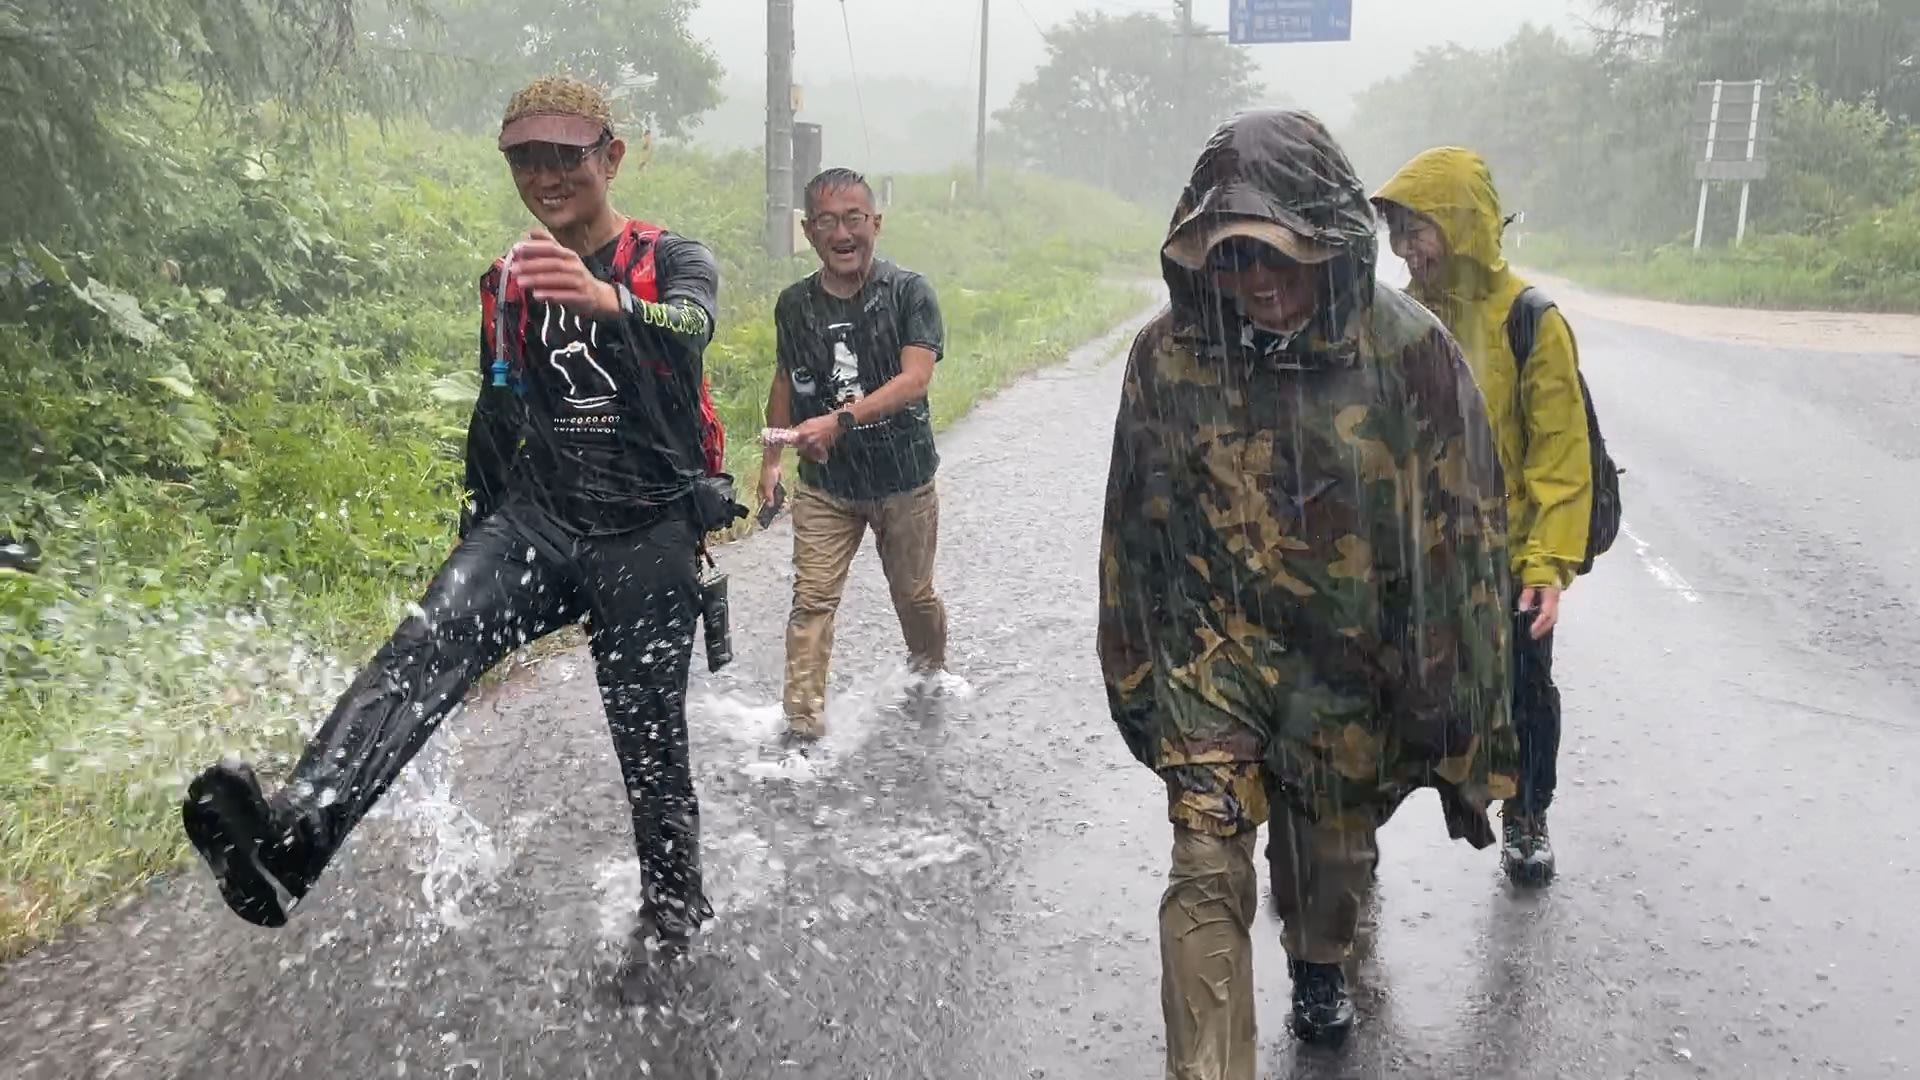 Adventure Hokkaido group walking in the rain